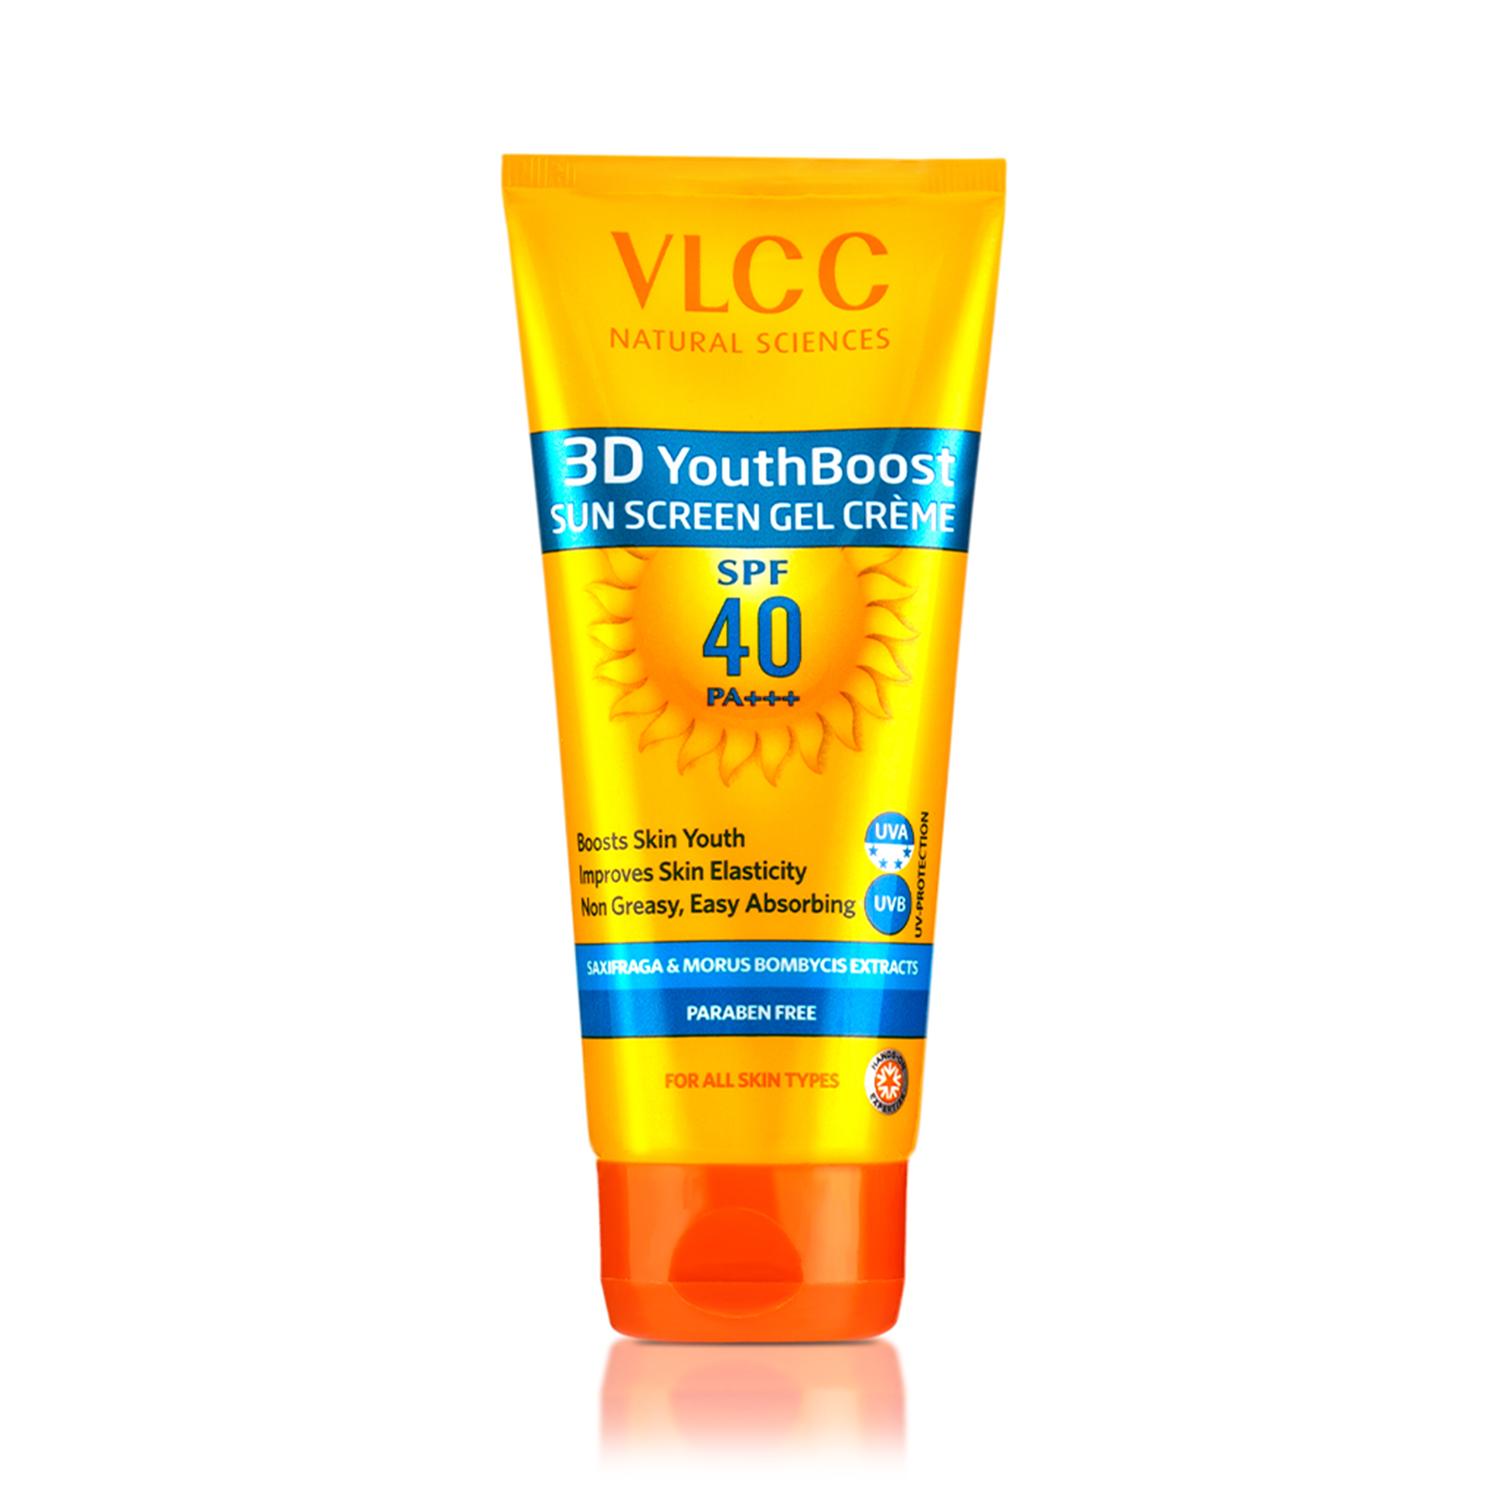 VLCC | VLCC Youth Boost Sun Screen Gel Creme SPF 40 (100g)